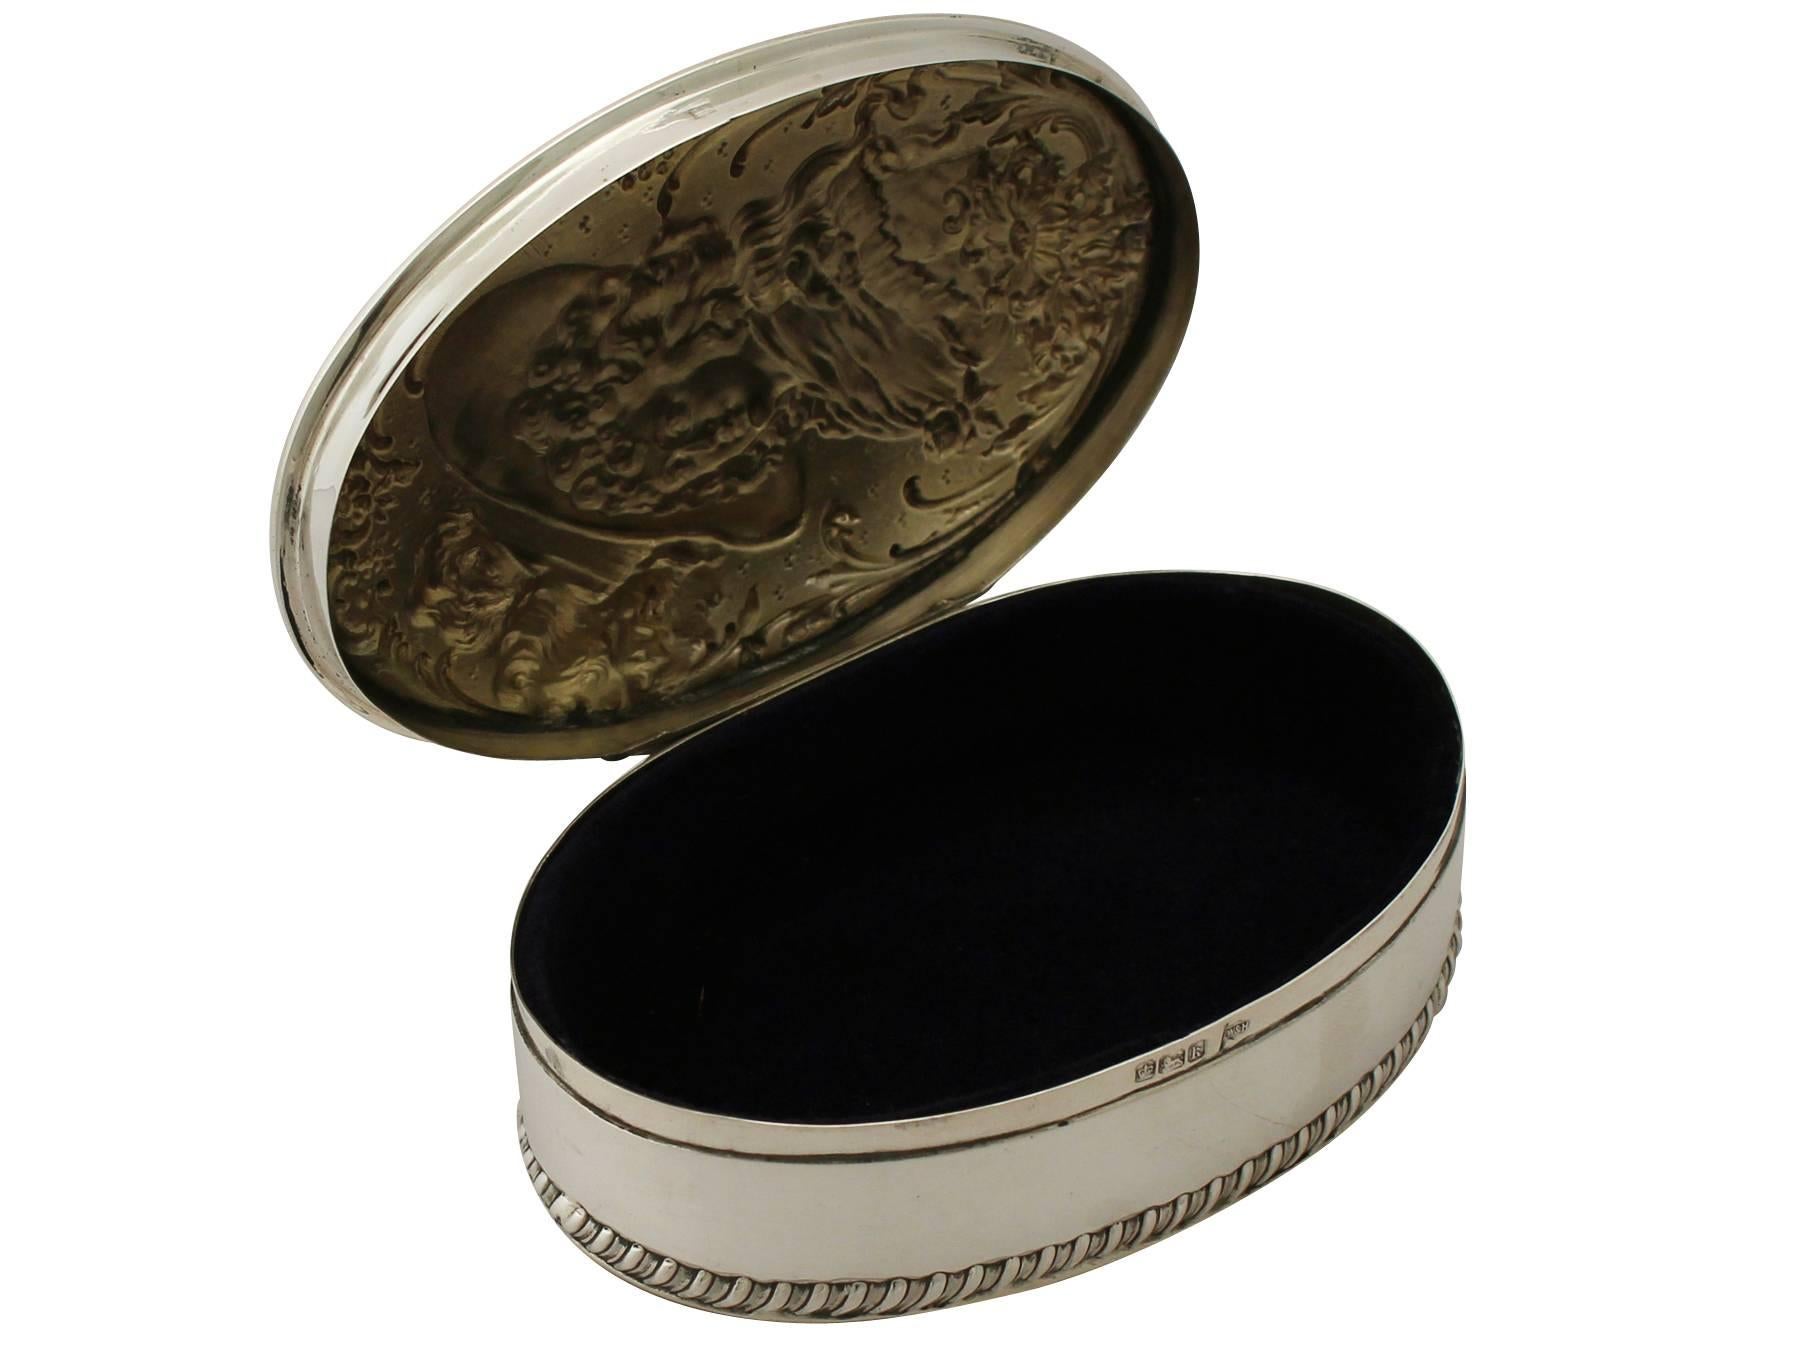 Early 20th Century Sterling Silver Jewelry/Trinket Box, Art Nouveau Style, Antique Edwardian